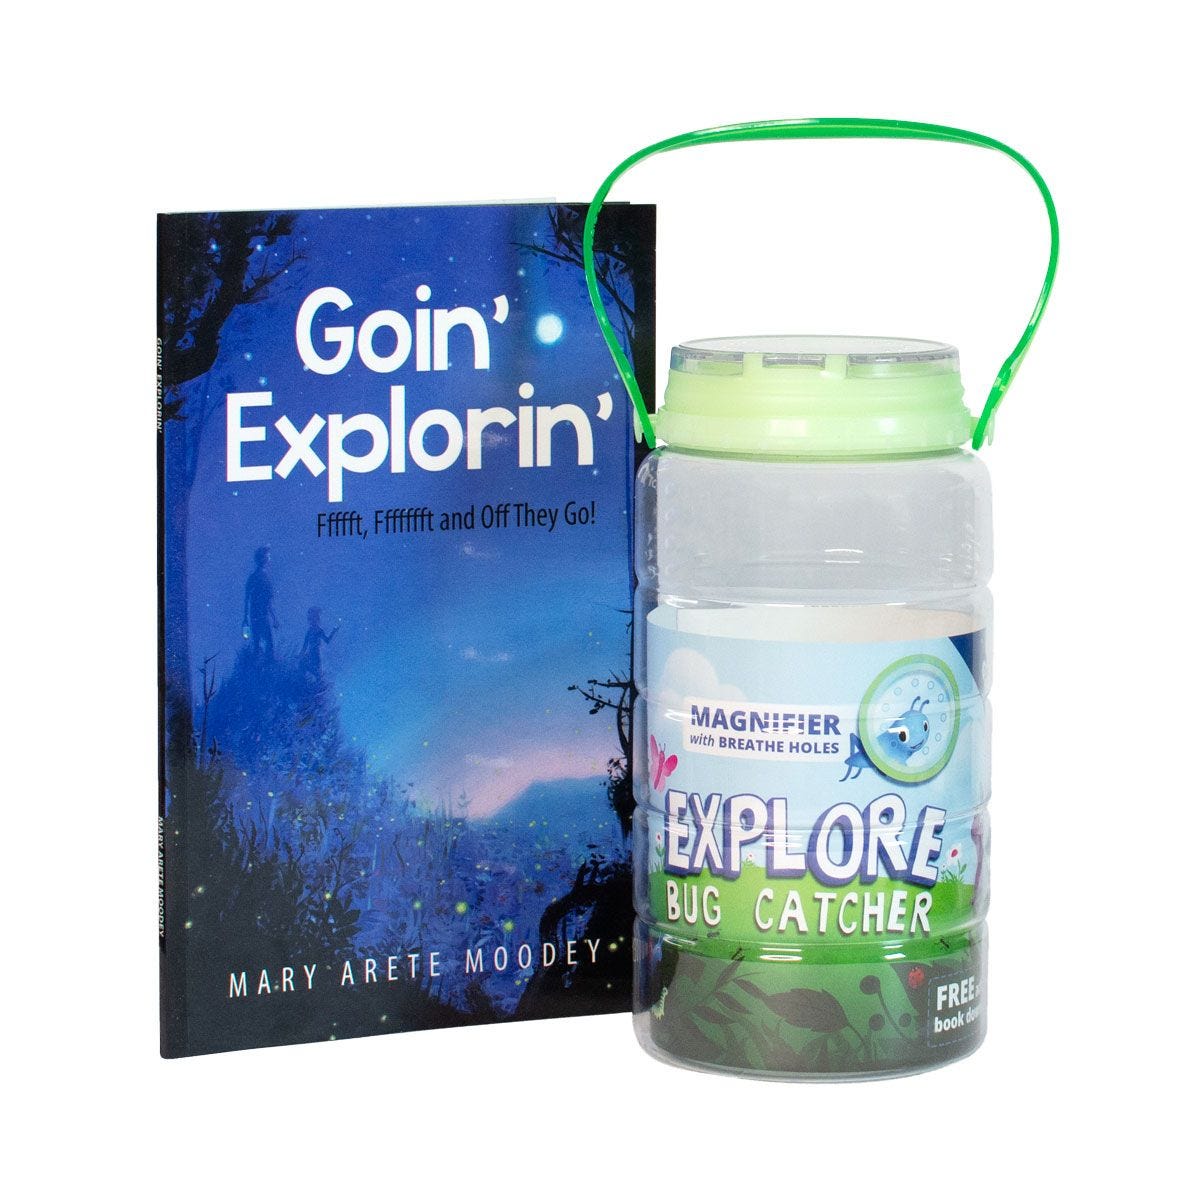 Goin Explorin book and Explorer Bug Catcher